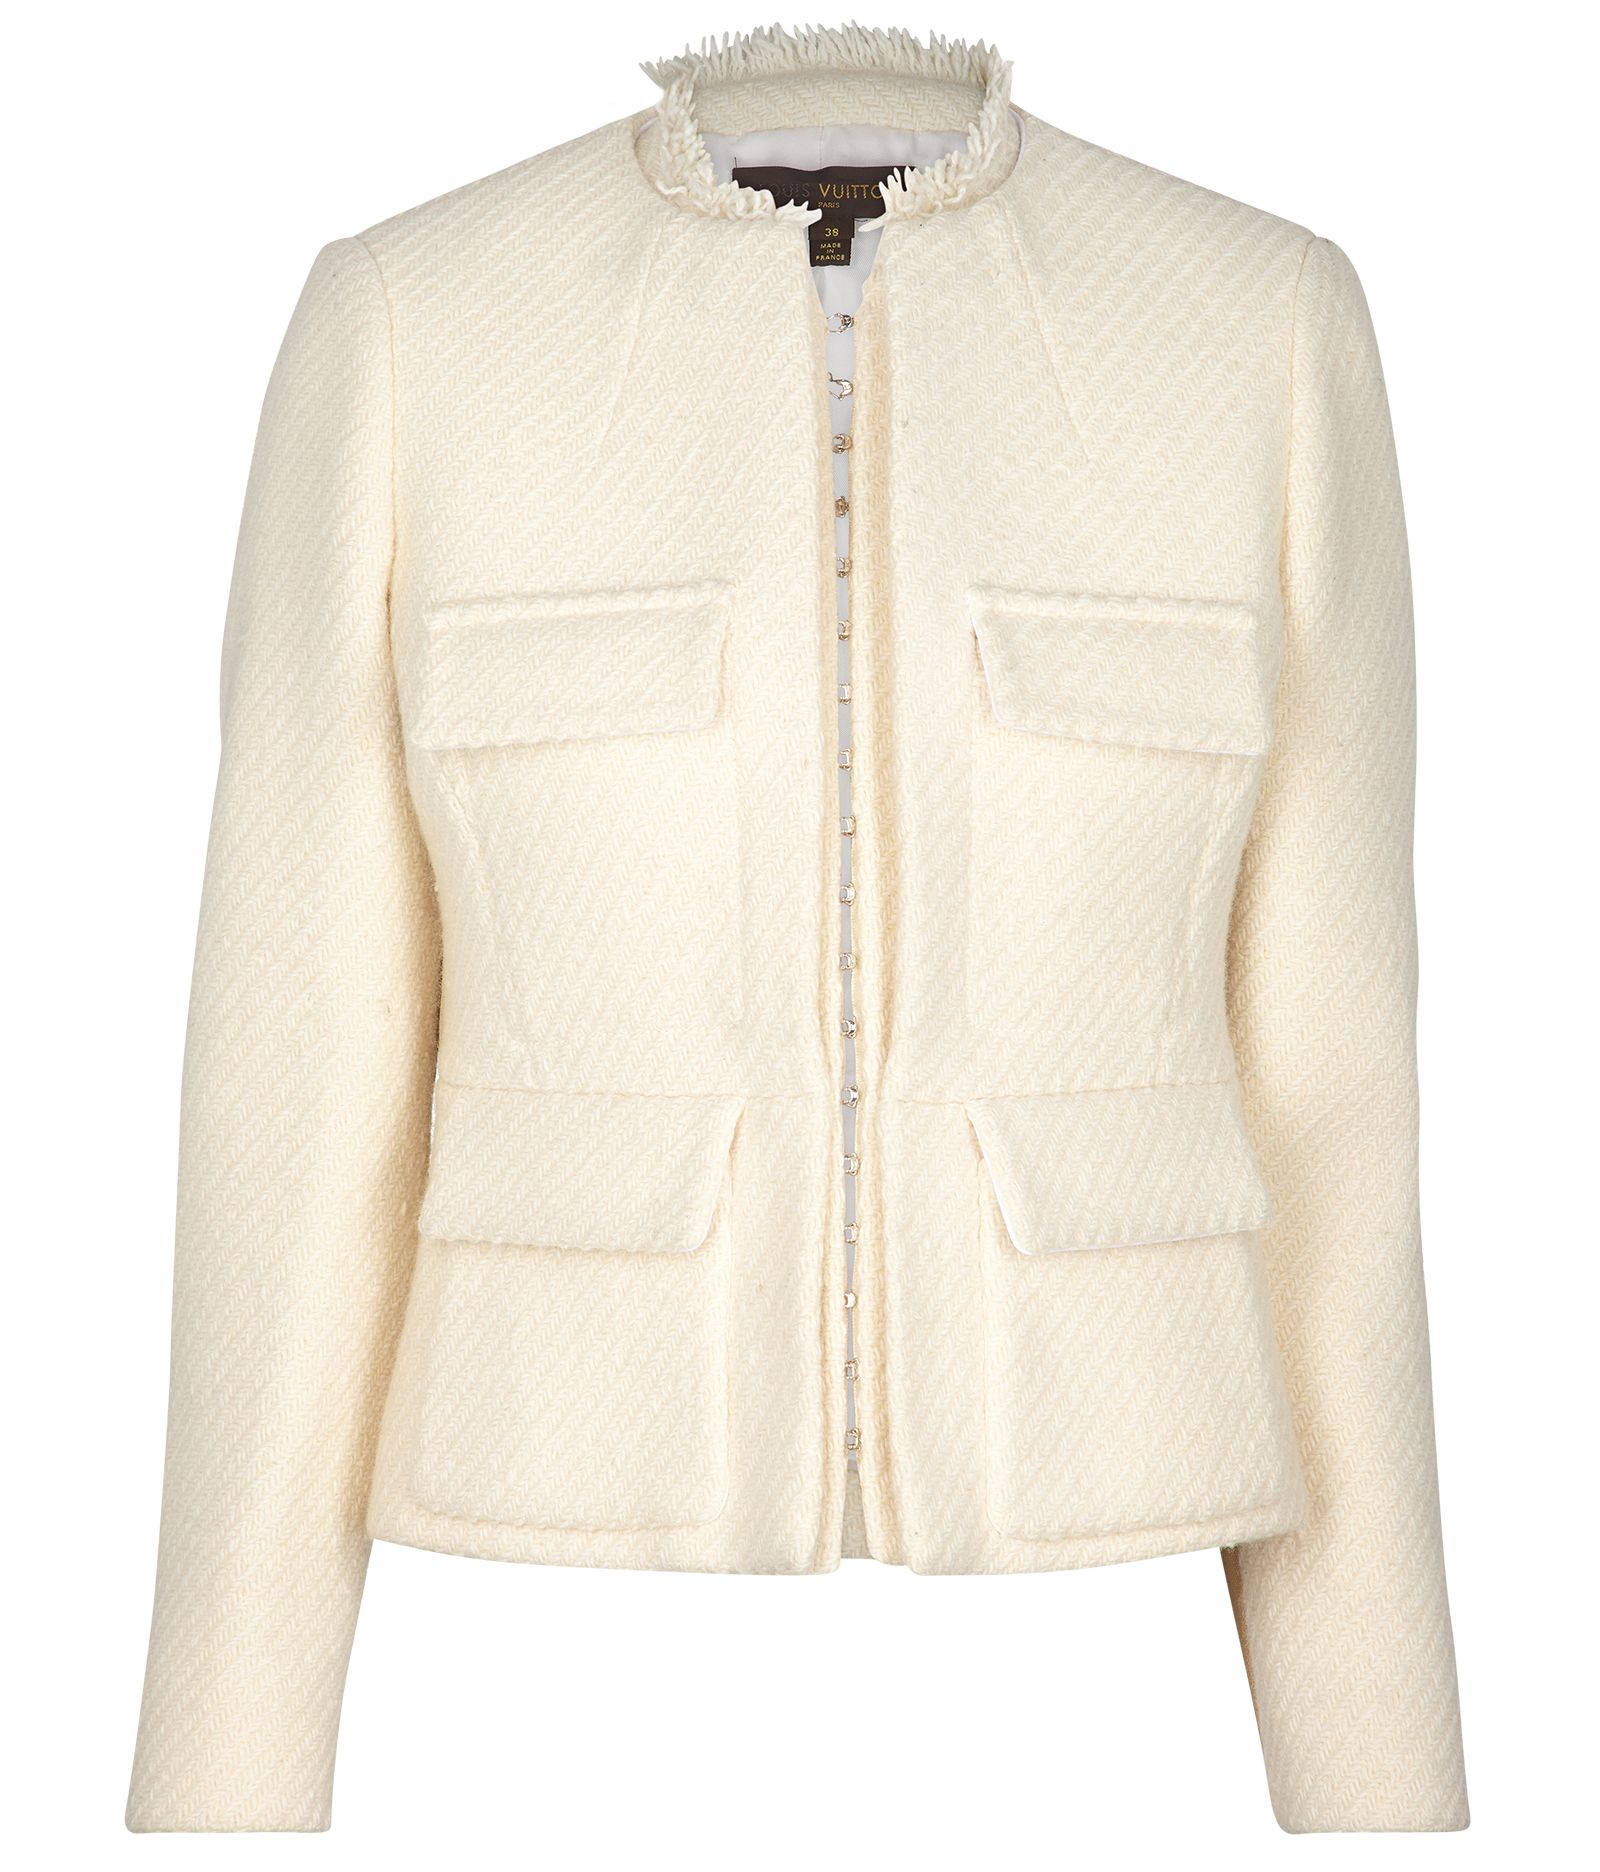 Louis Vuitton - Authenticated Jacket - Silk White Plain for Women, Good Condition